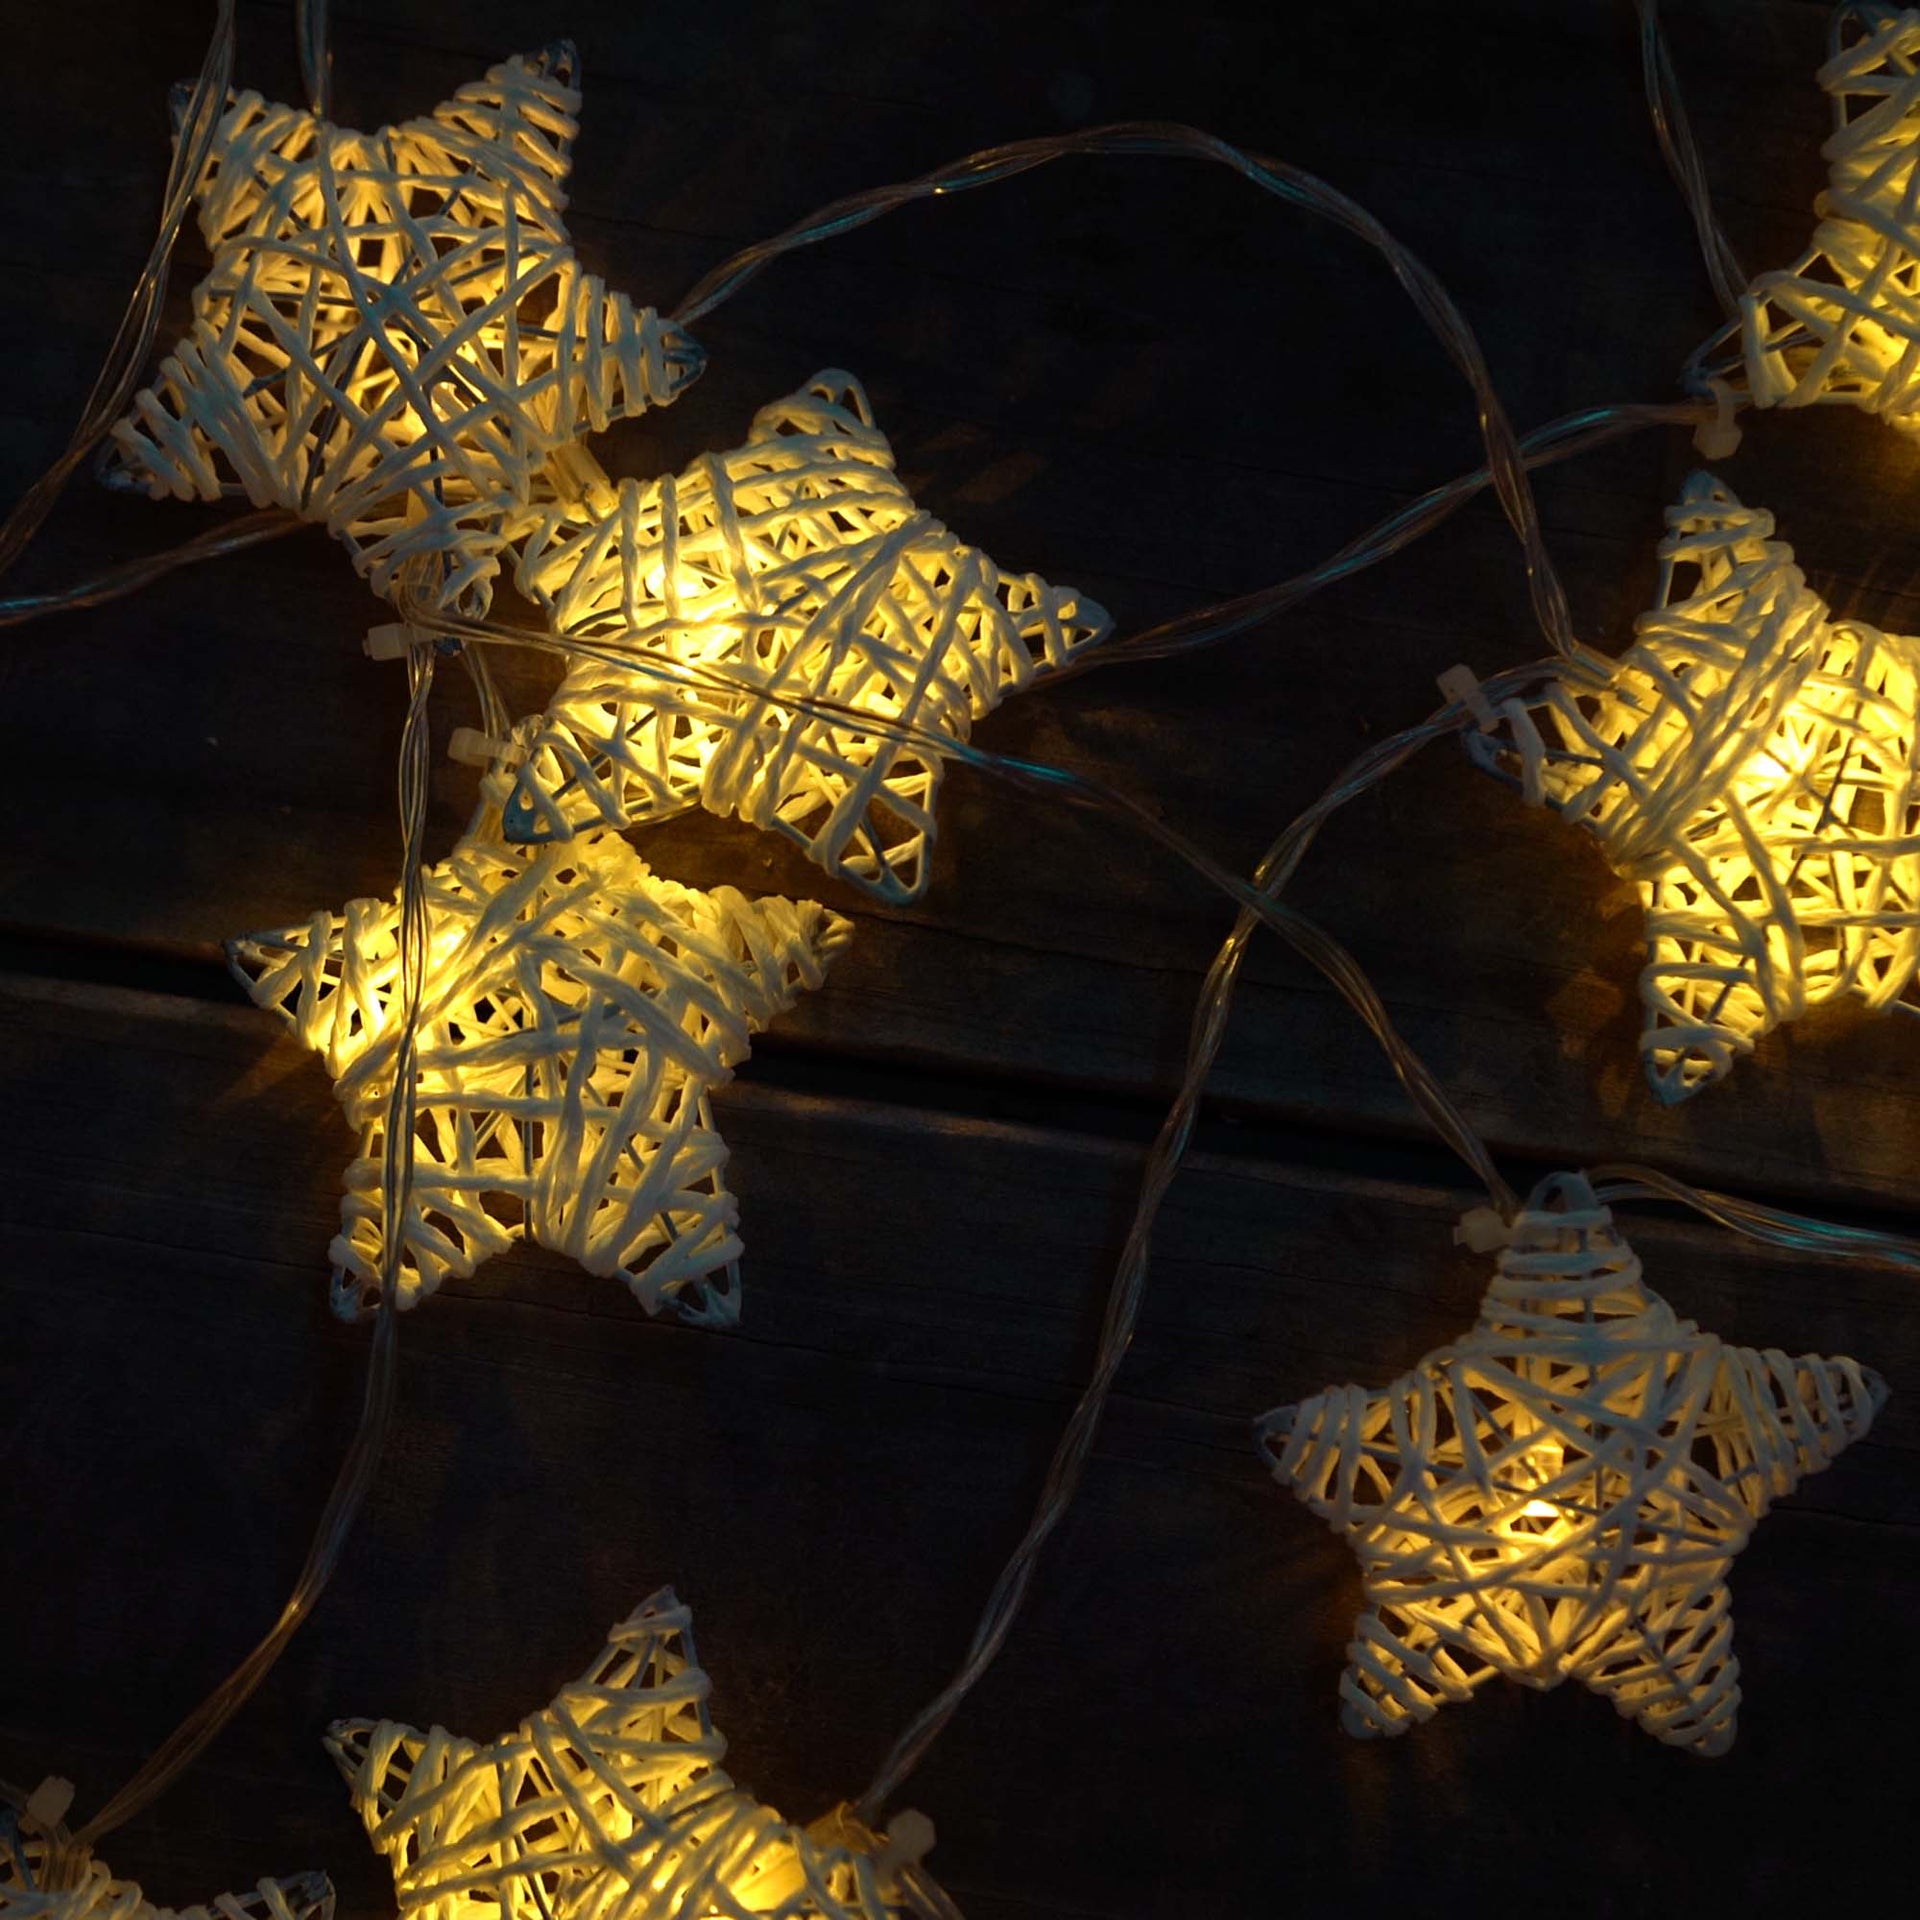 10 LED Metal Covered Stars String Fairy Light 6 feet  Battery Powered, Warm White - West Ivory LED Lighting 